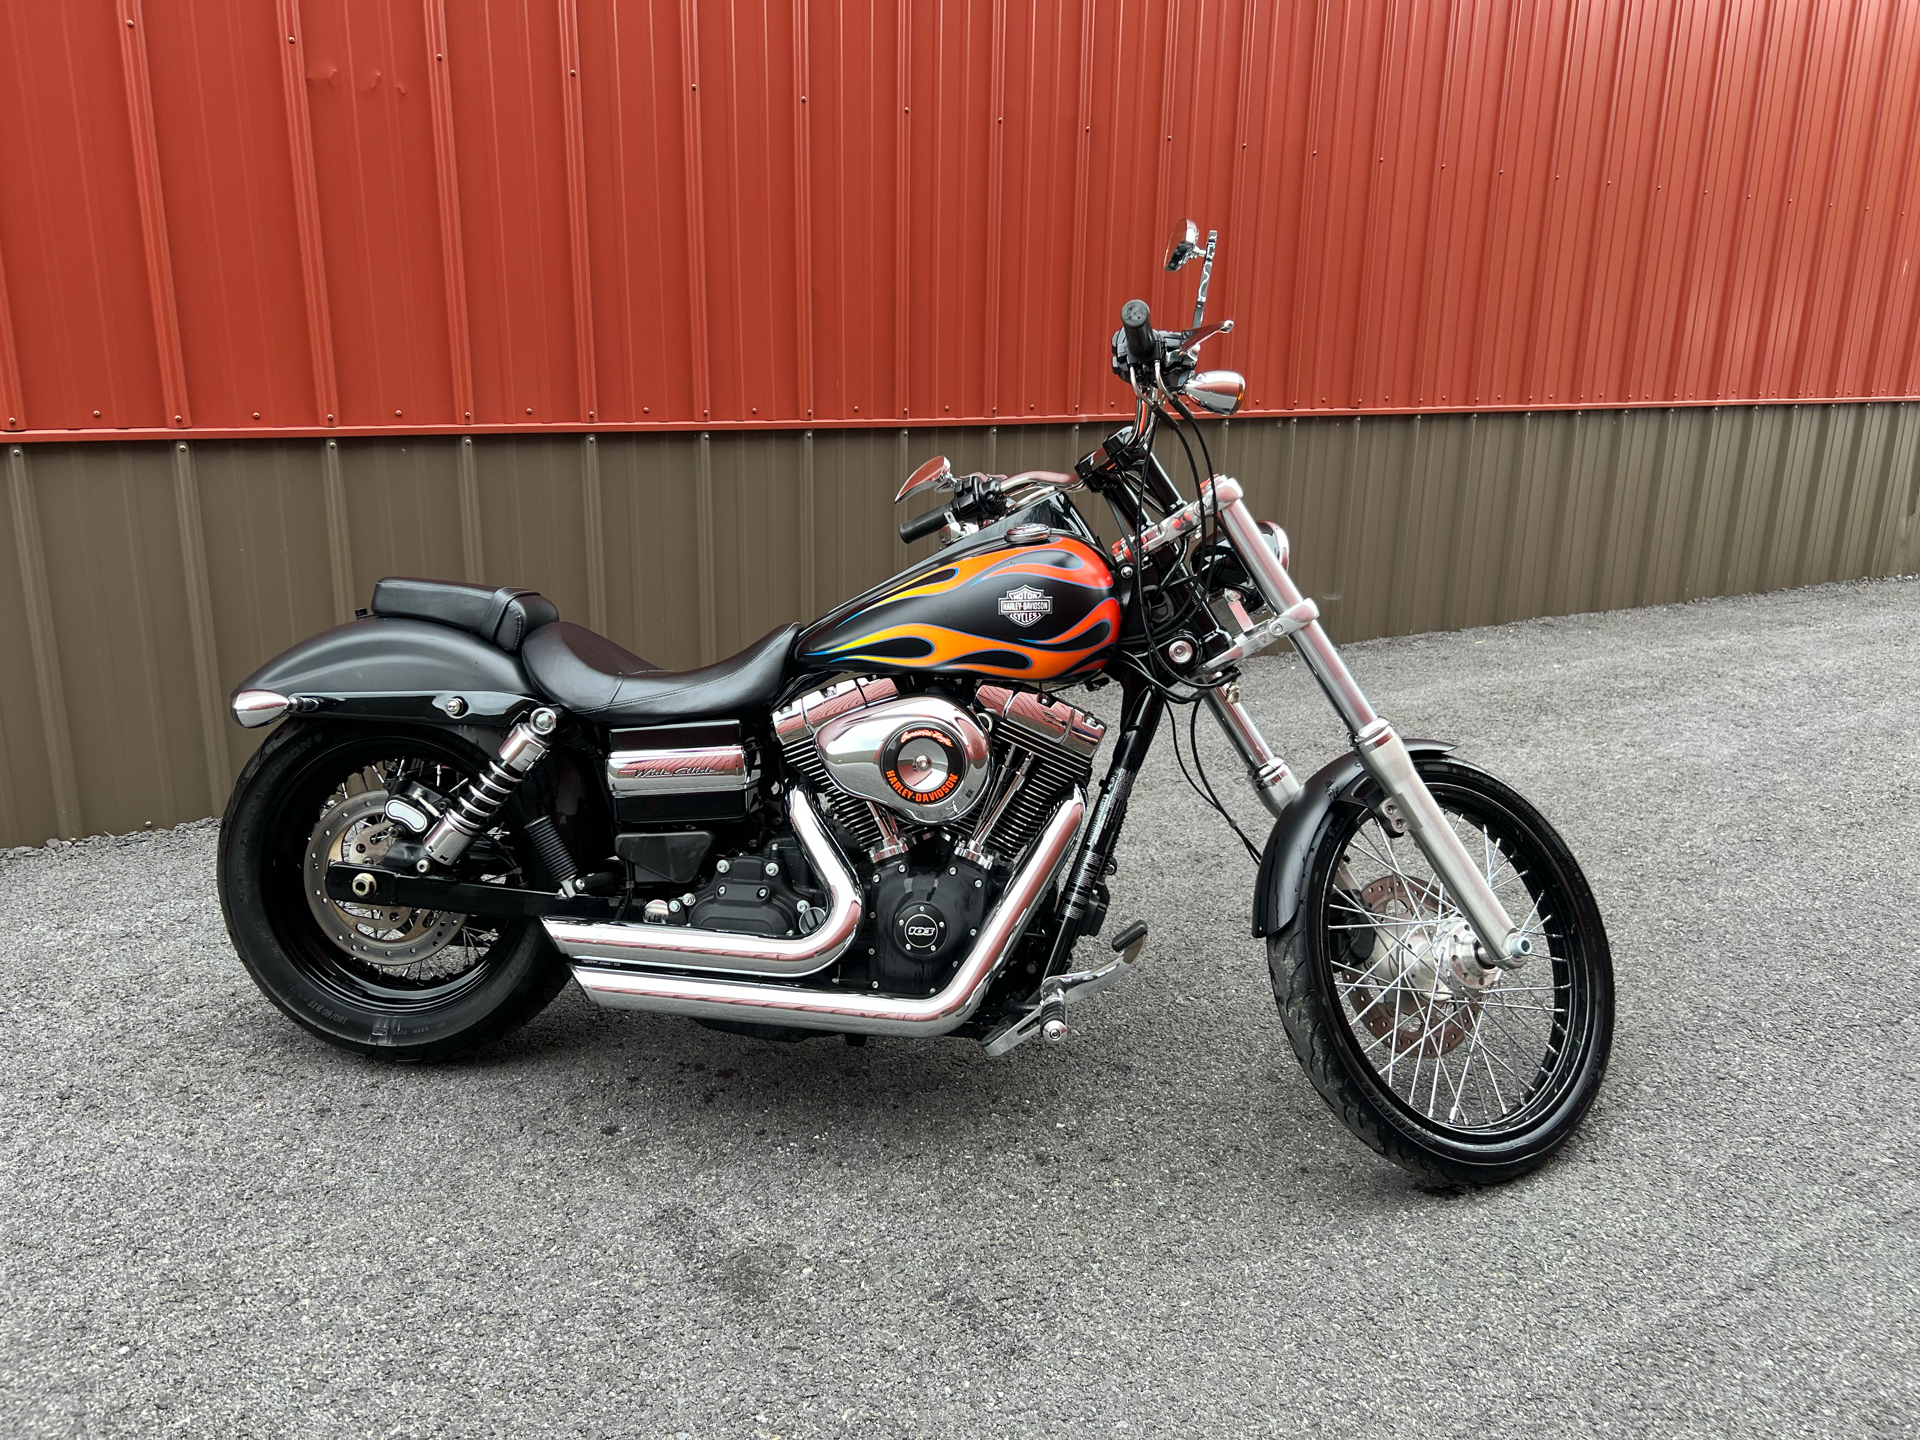 2015 Harley-Davidson Wide Glide® in Tyrone, Pennsylvania - Photo 2